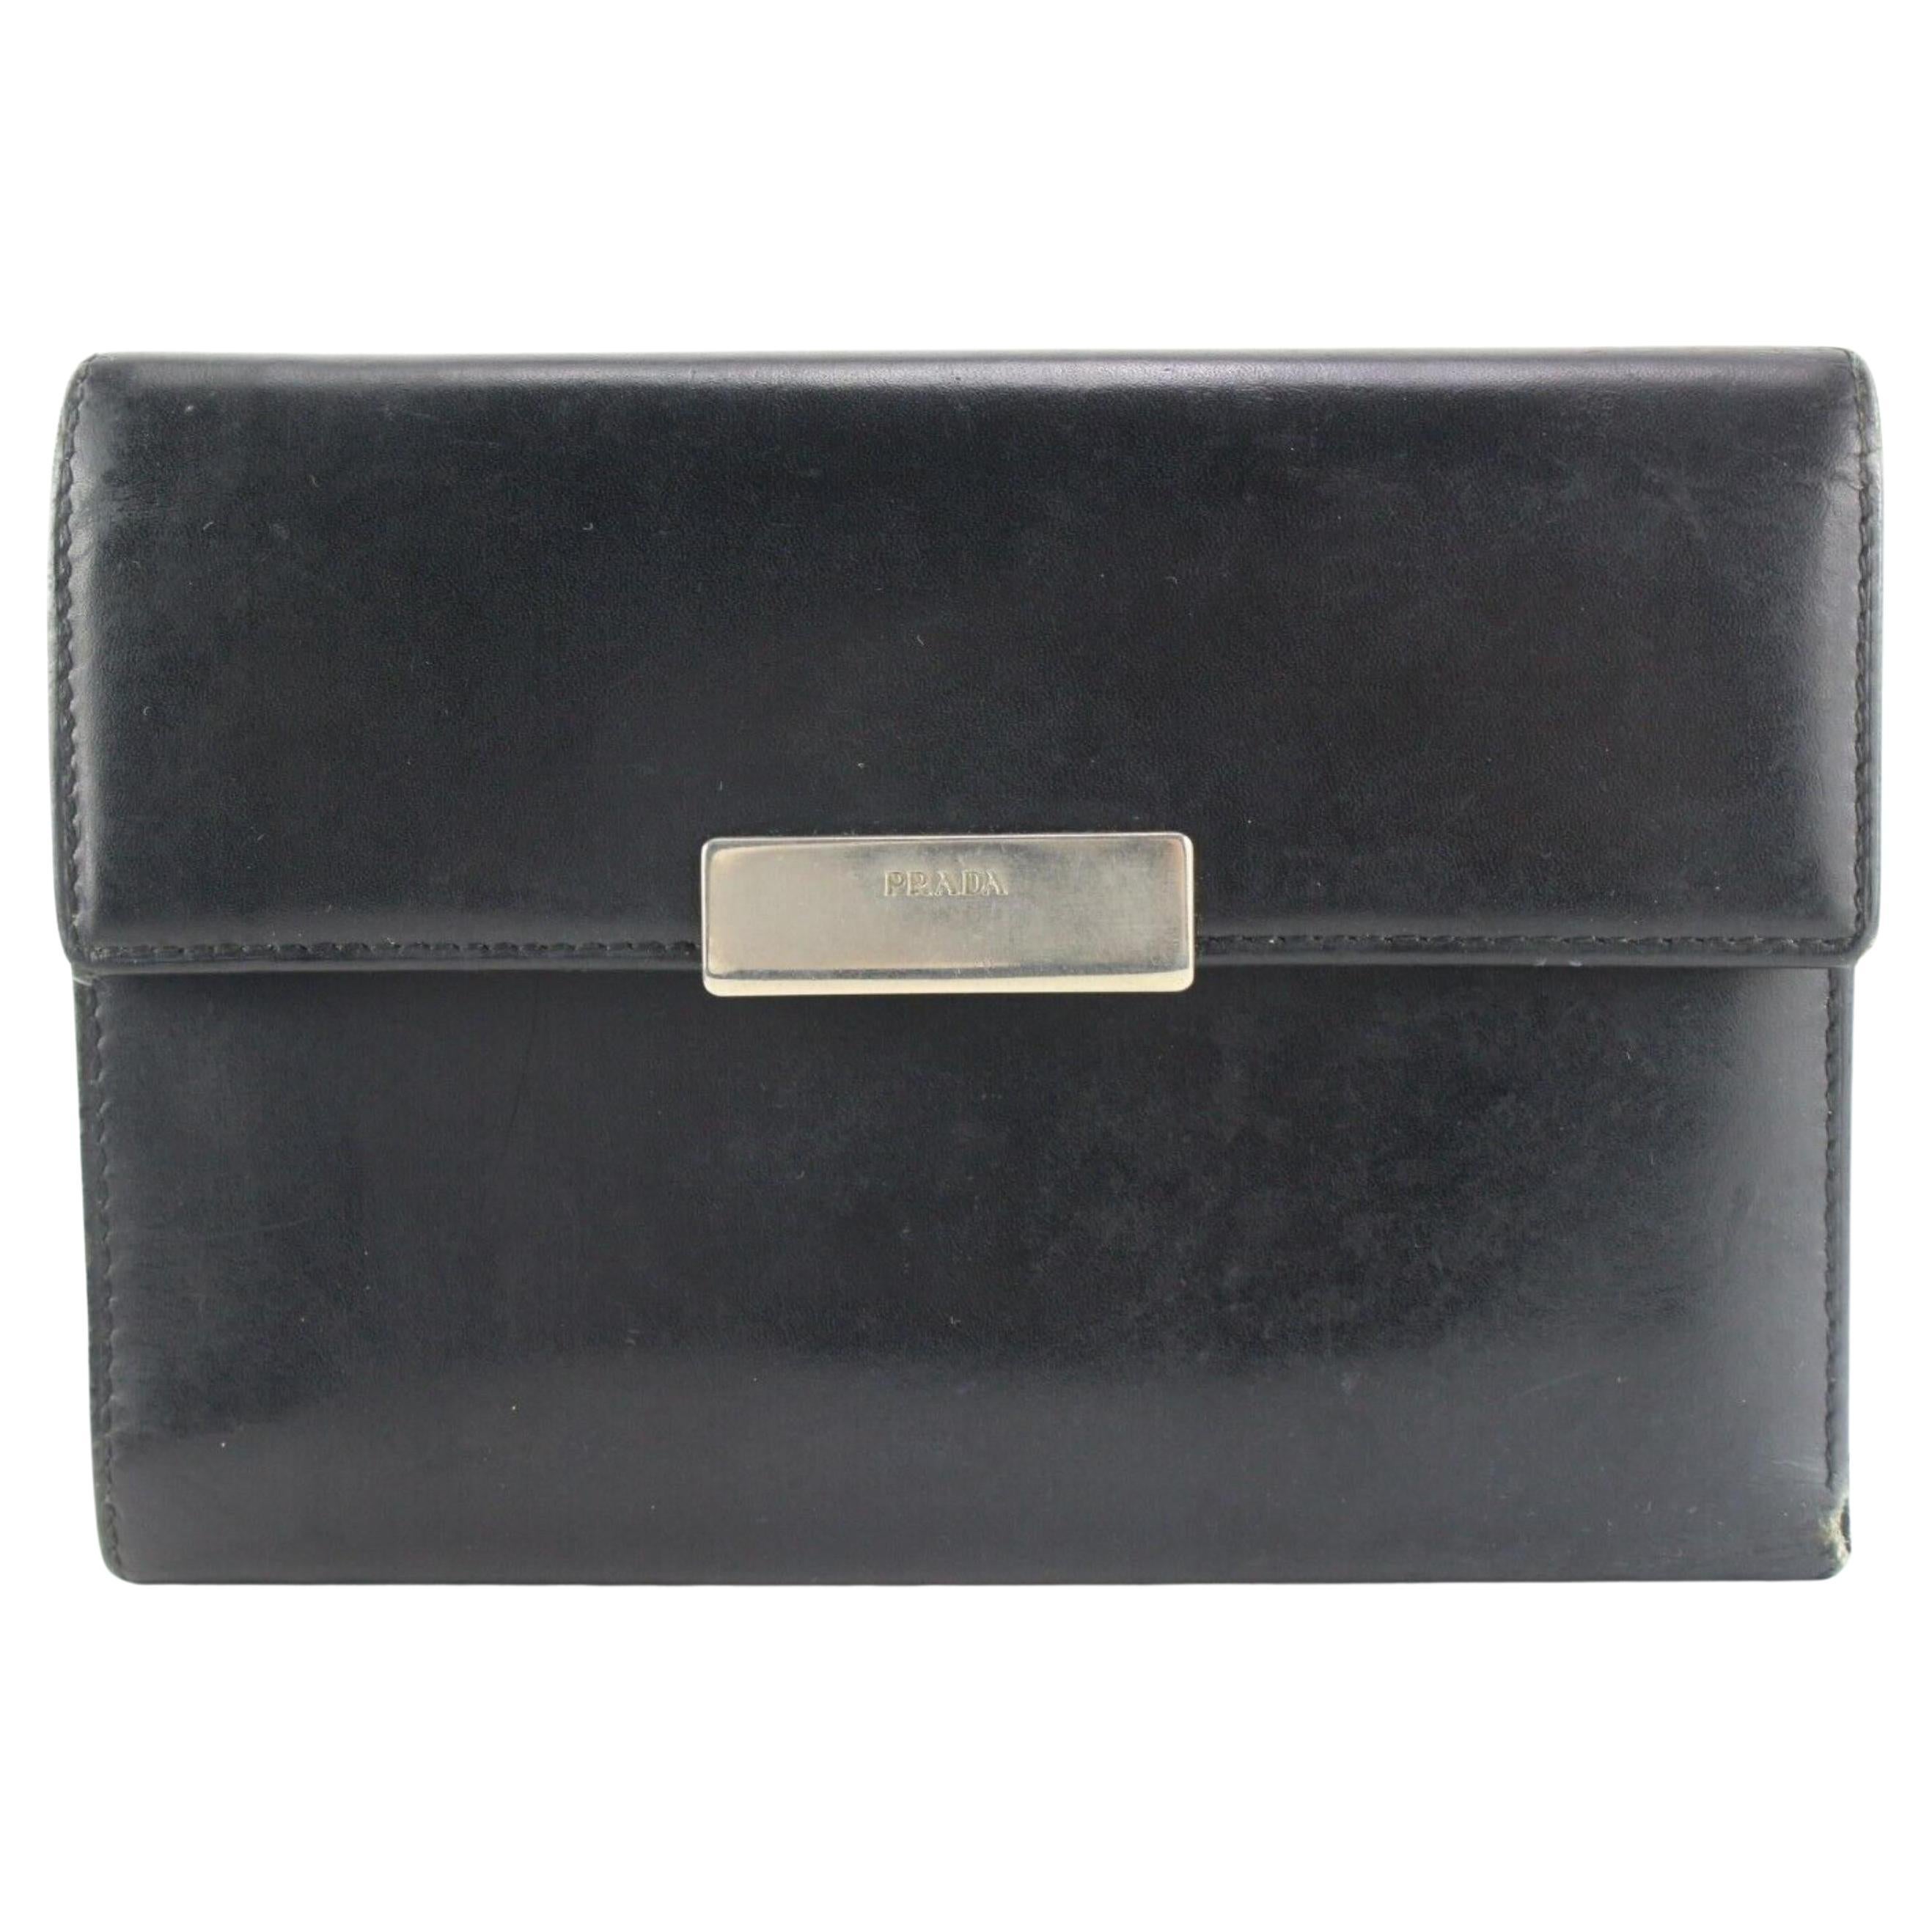 Prada Black Leather Trifold Wallet 2P0509